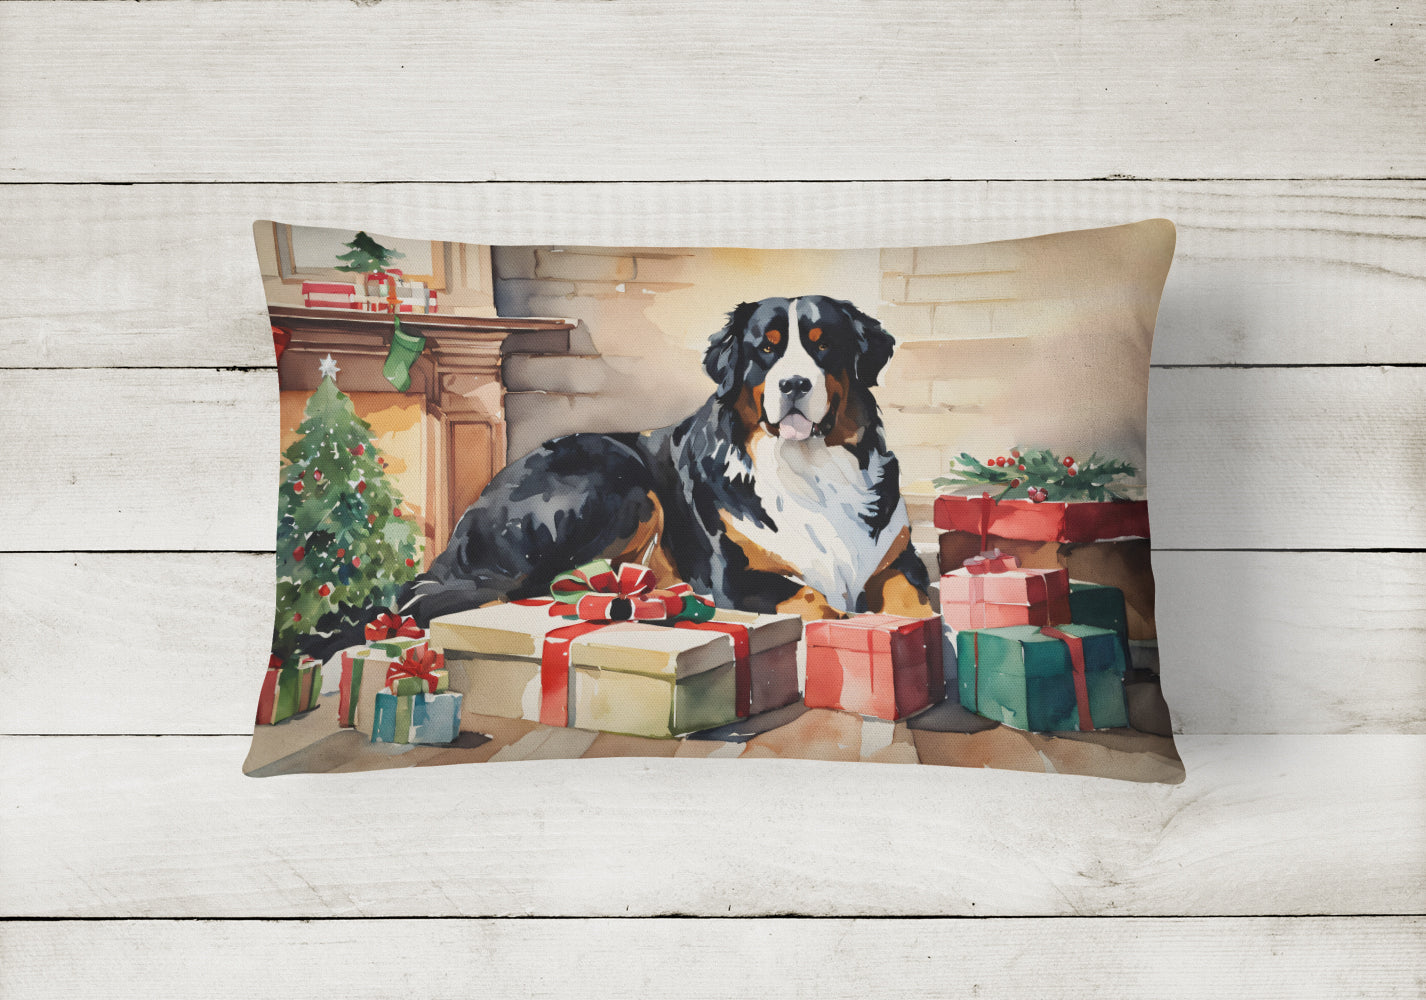 Buy this Bernese Mountain Dog Cozy Christmas Throw Pillow